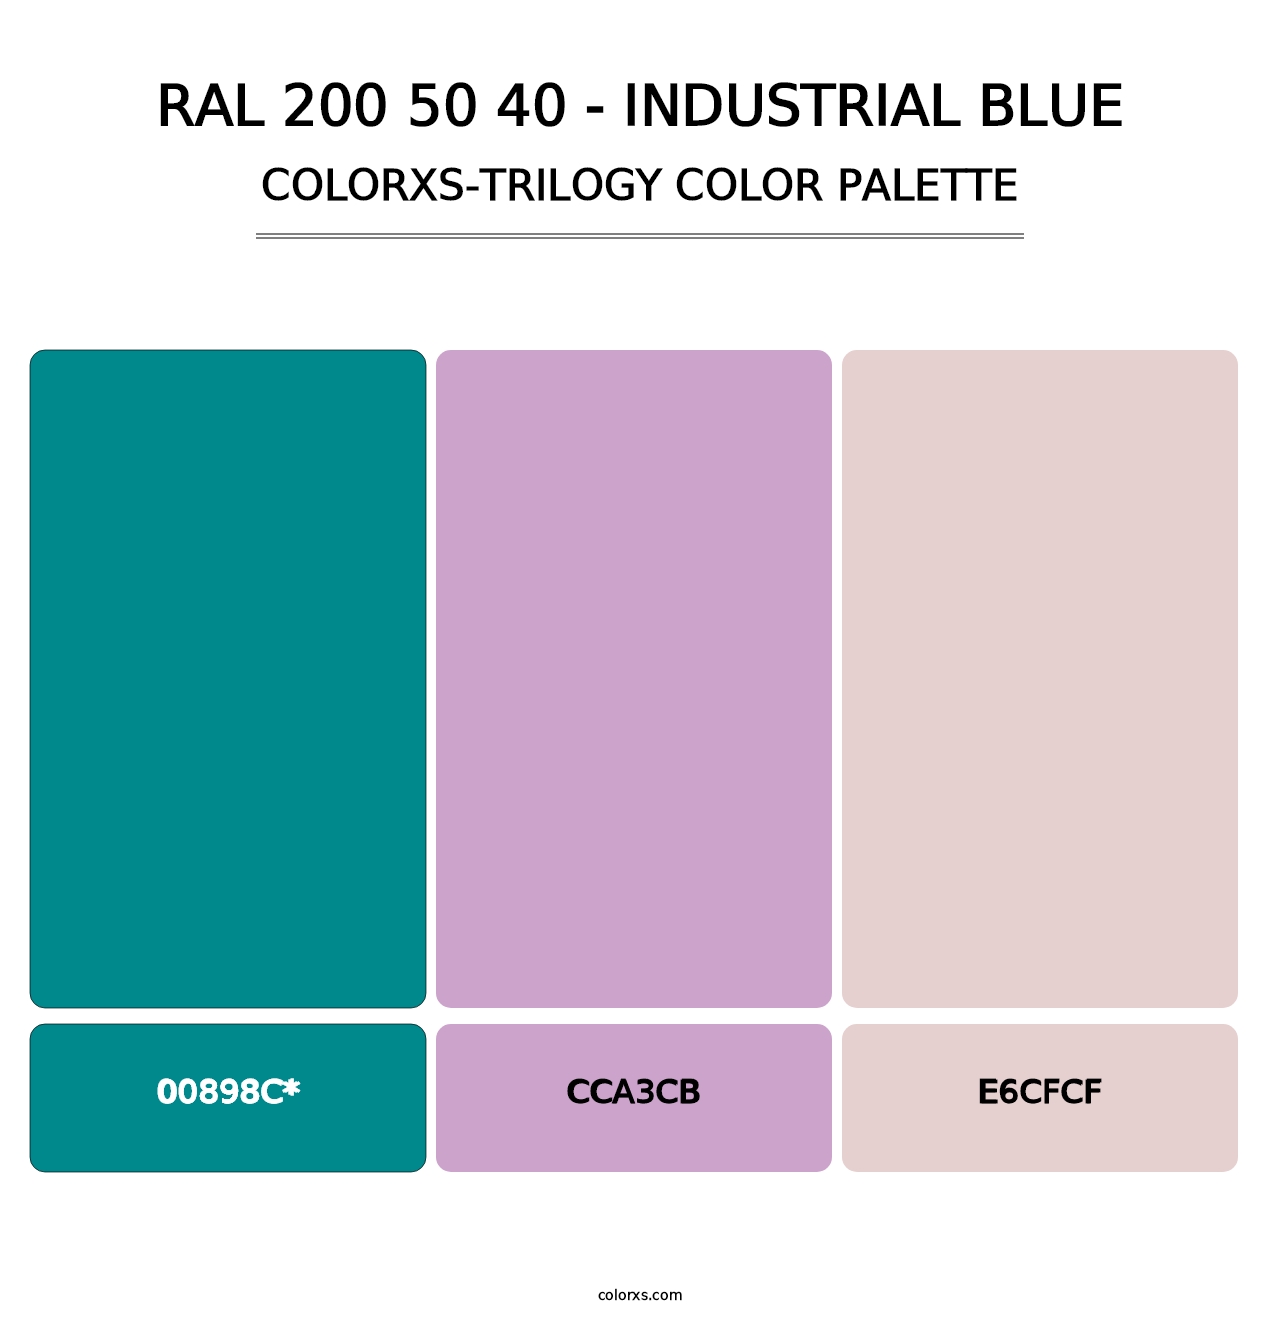 RAL 200 50 40 - Industrial Blue - Colorxs Trilogy Palette